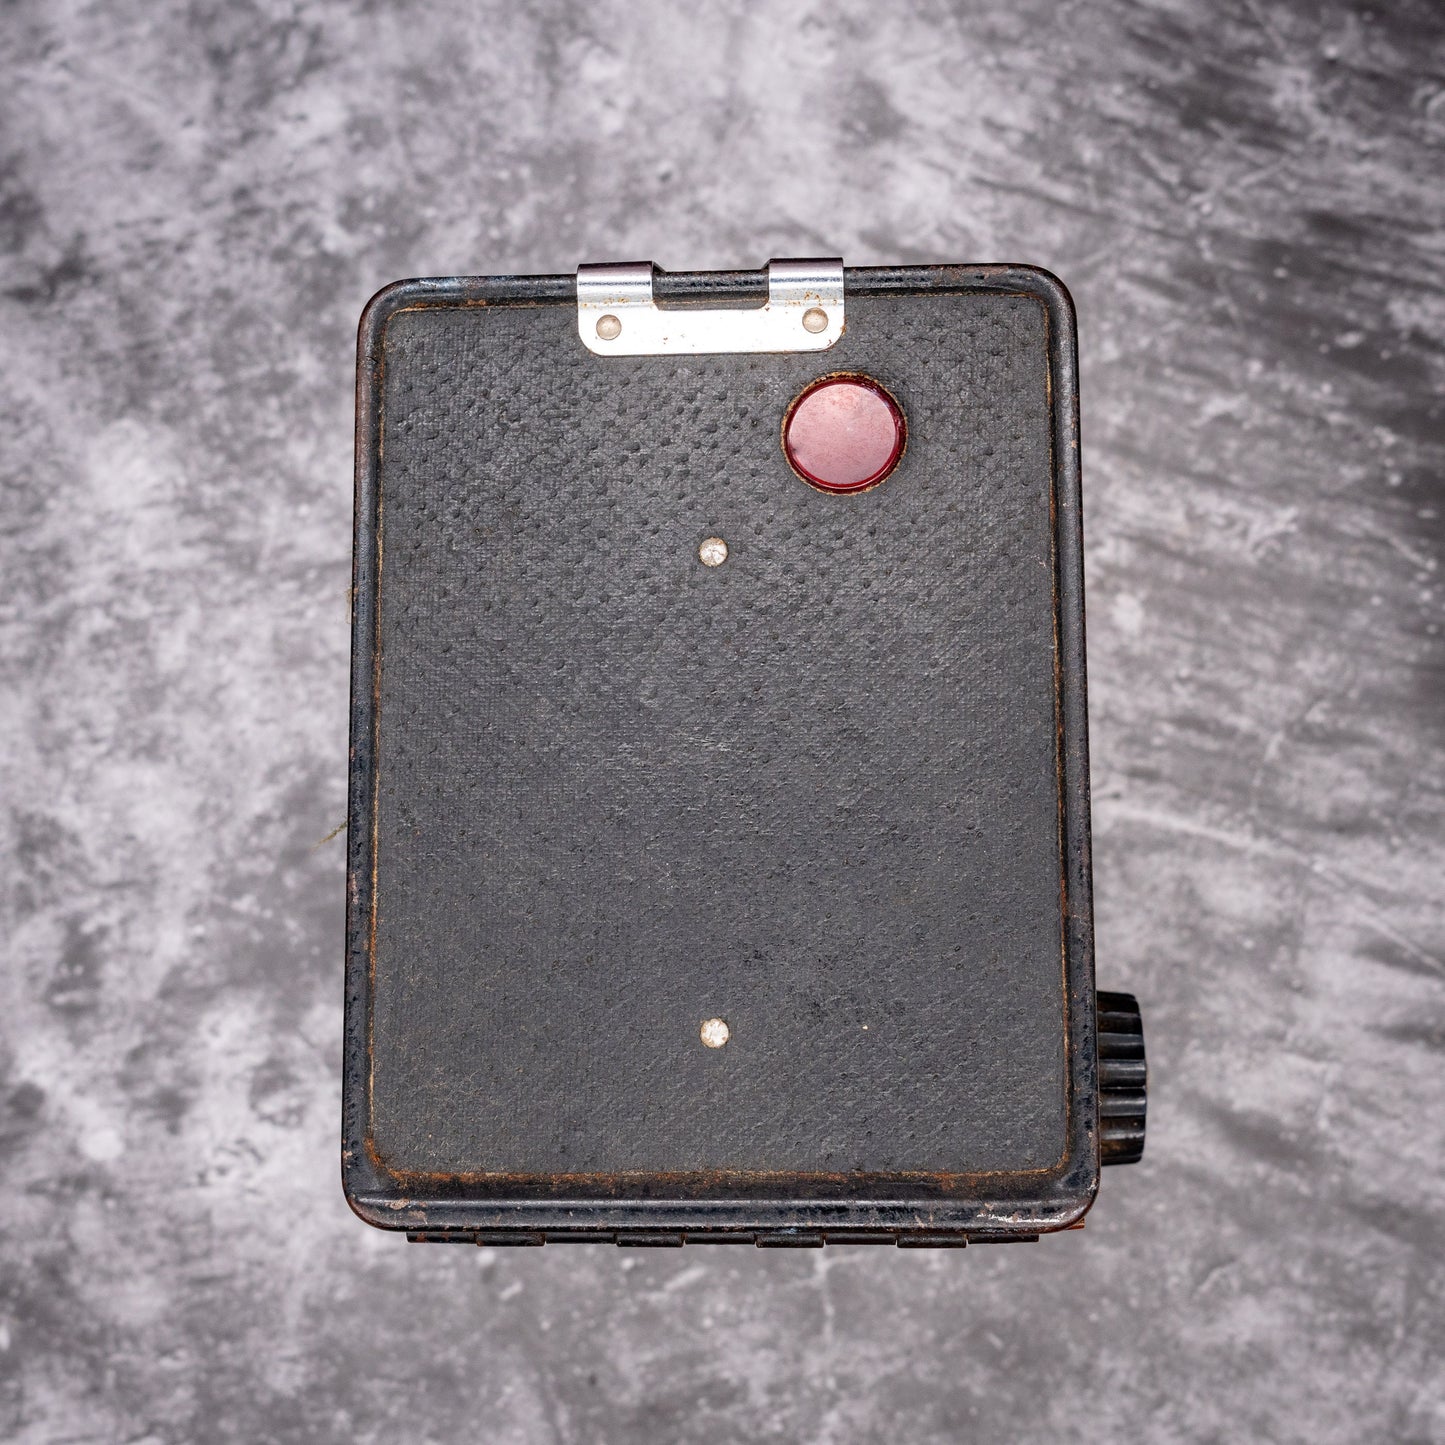 Vintage Film Camera Kit | Kodak Six-20 Brownie E + Roll Of Expired Film